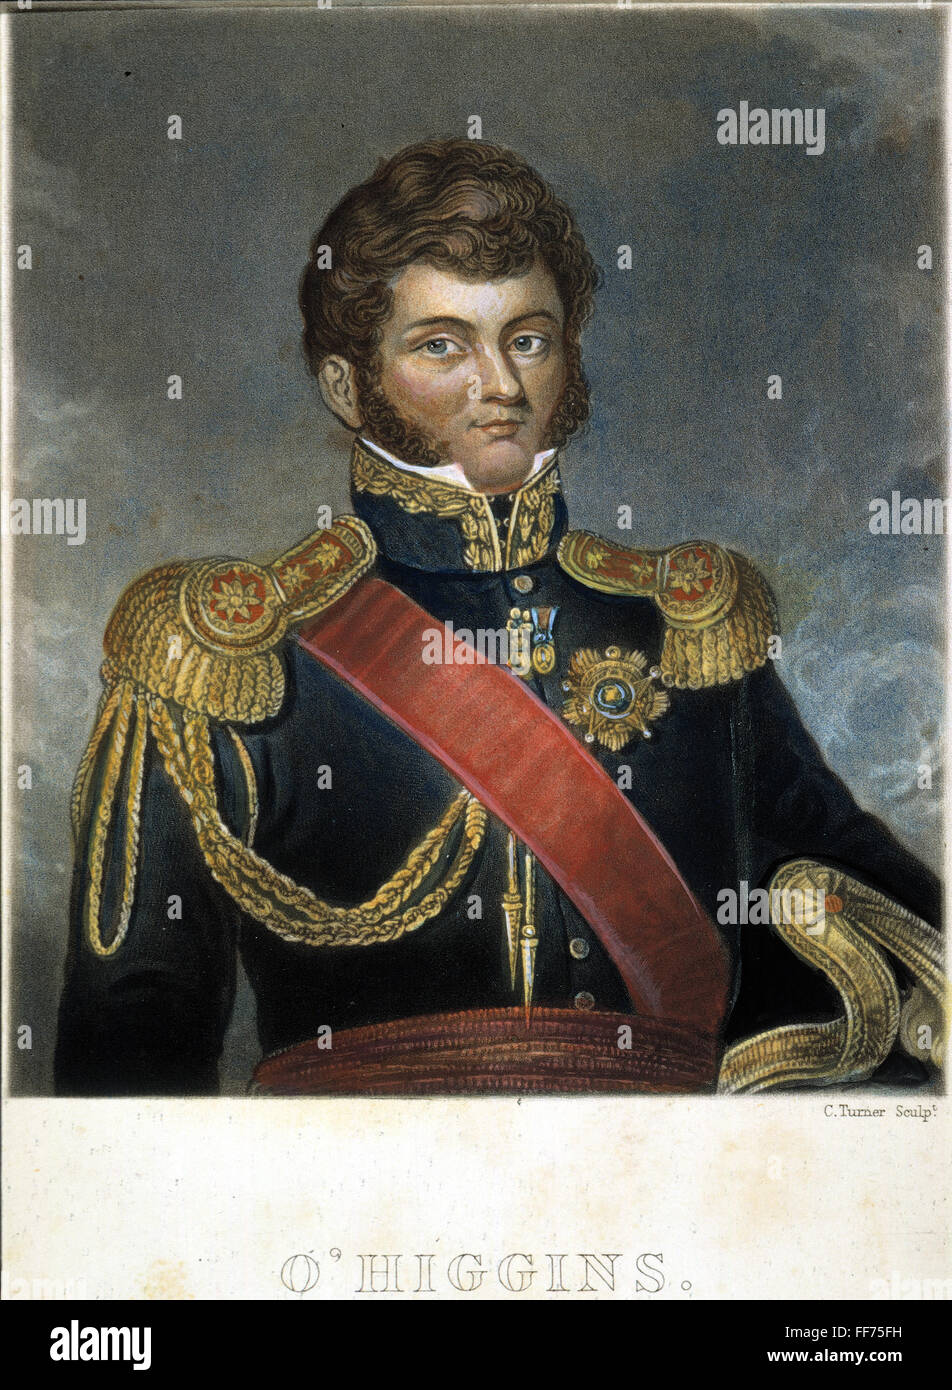 BERNARDO O'HIGGINS /n(1778-1842). Chilean soldier and statesman. English mezzotint, 1829. Stock Photo